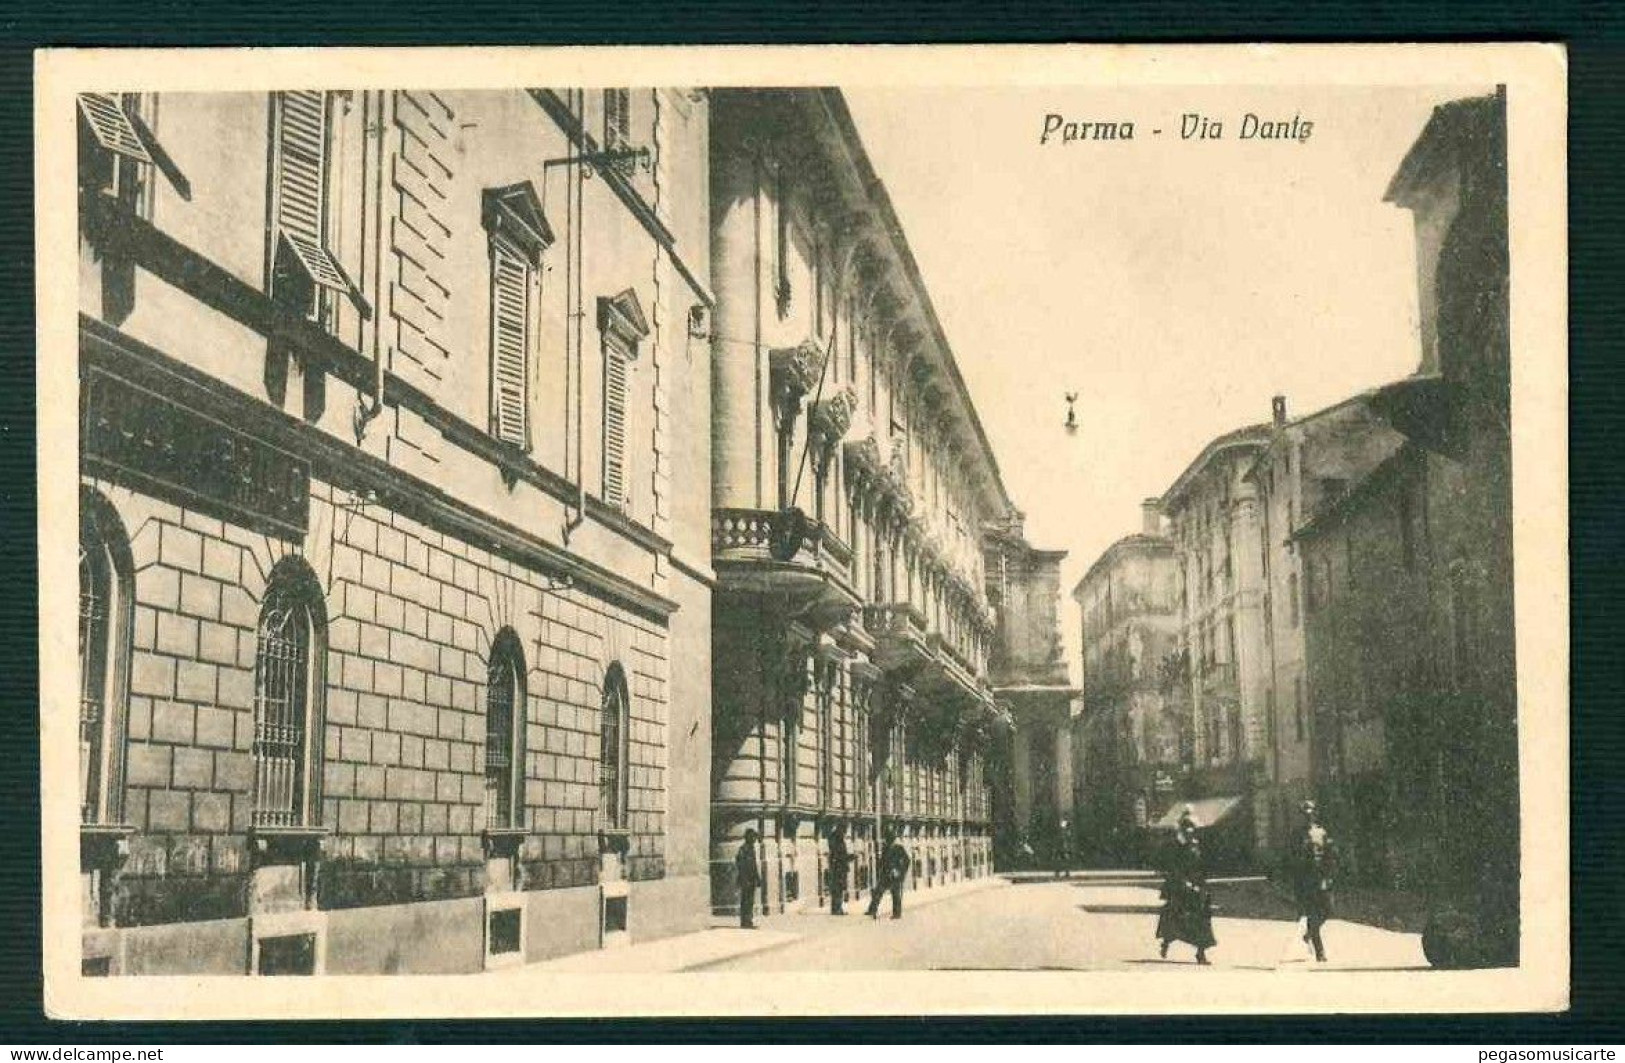 BF087 PARMA - VIA DANTE - ANIMATA 1920 CIRCA - Parma